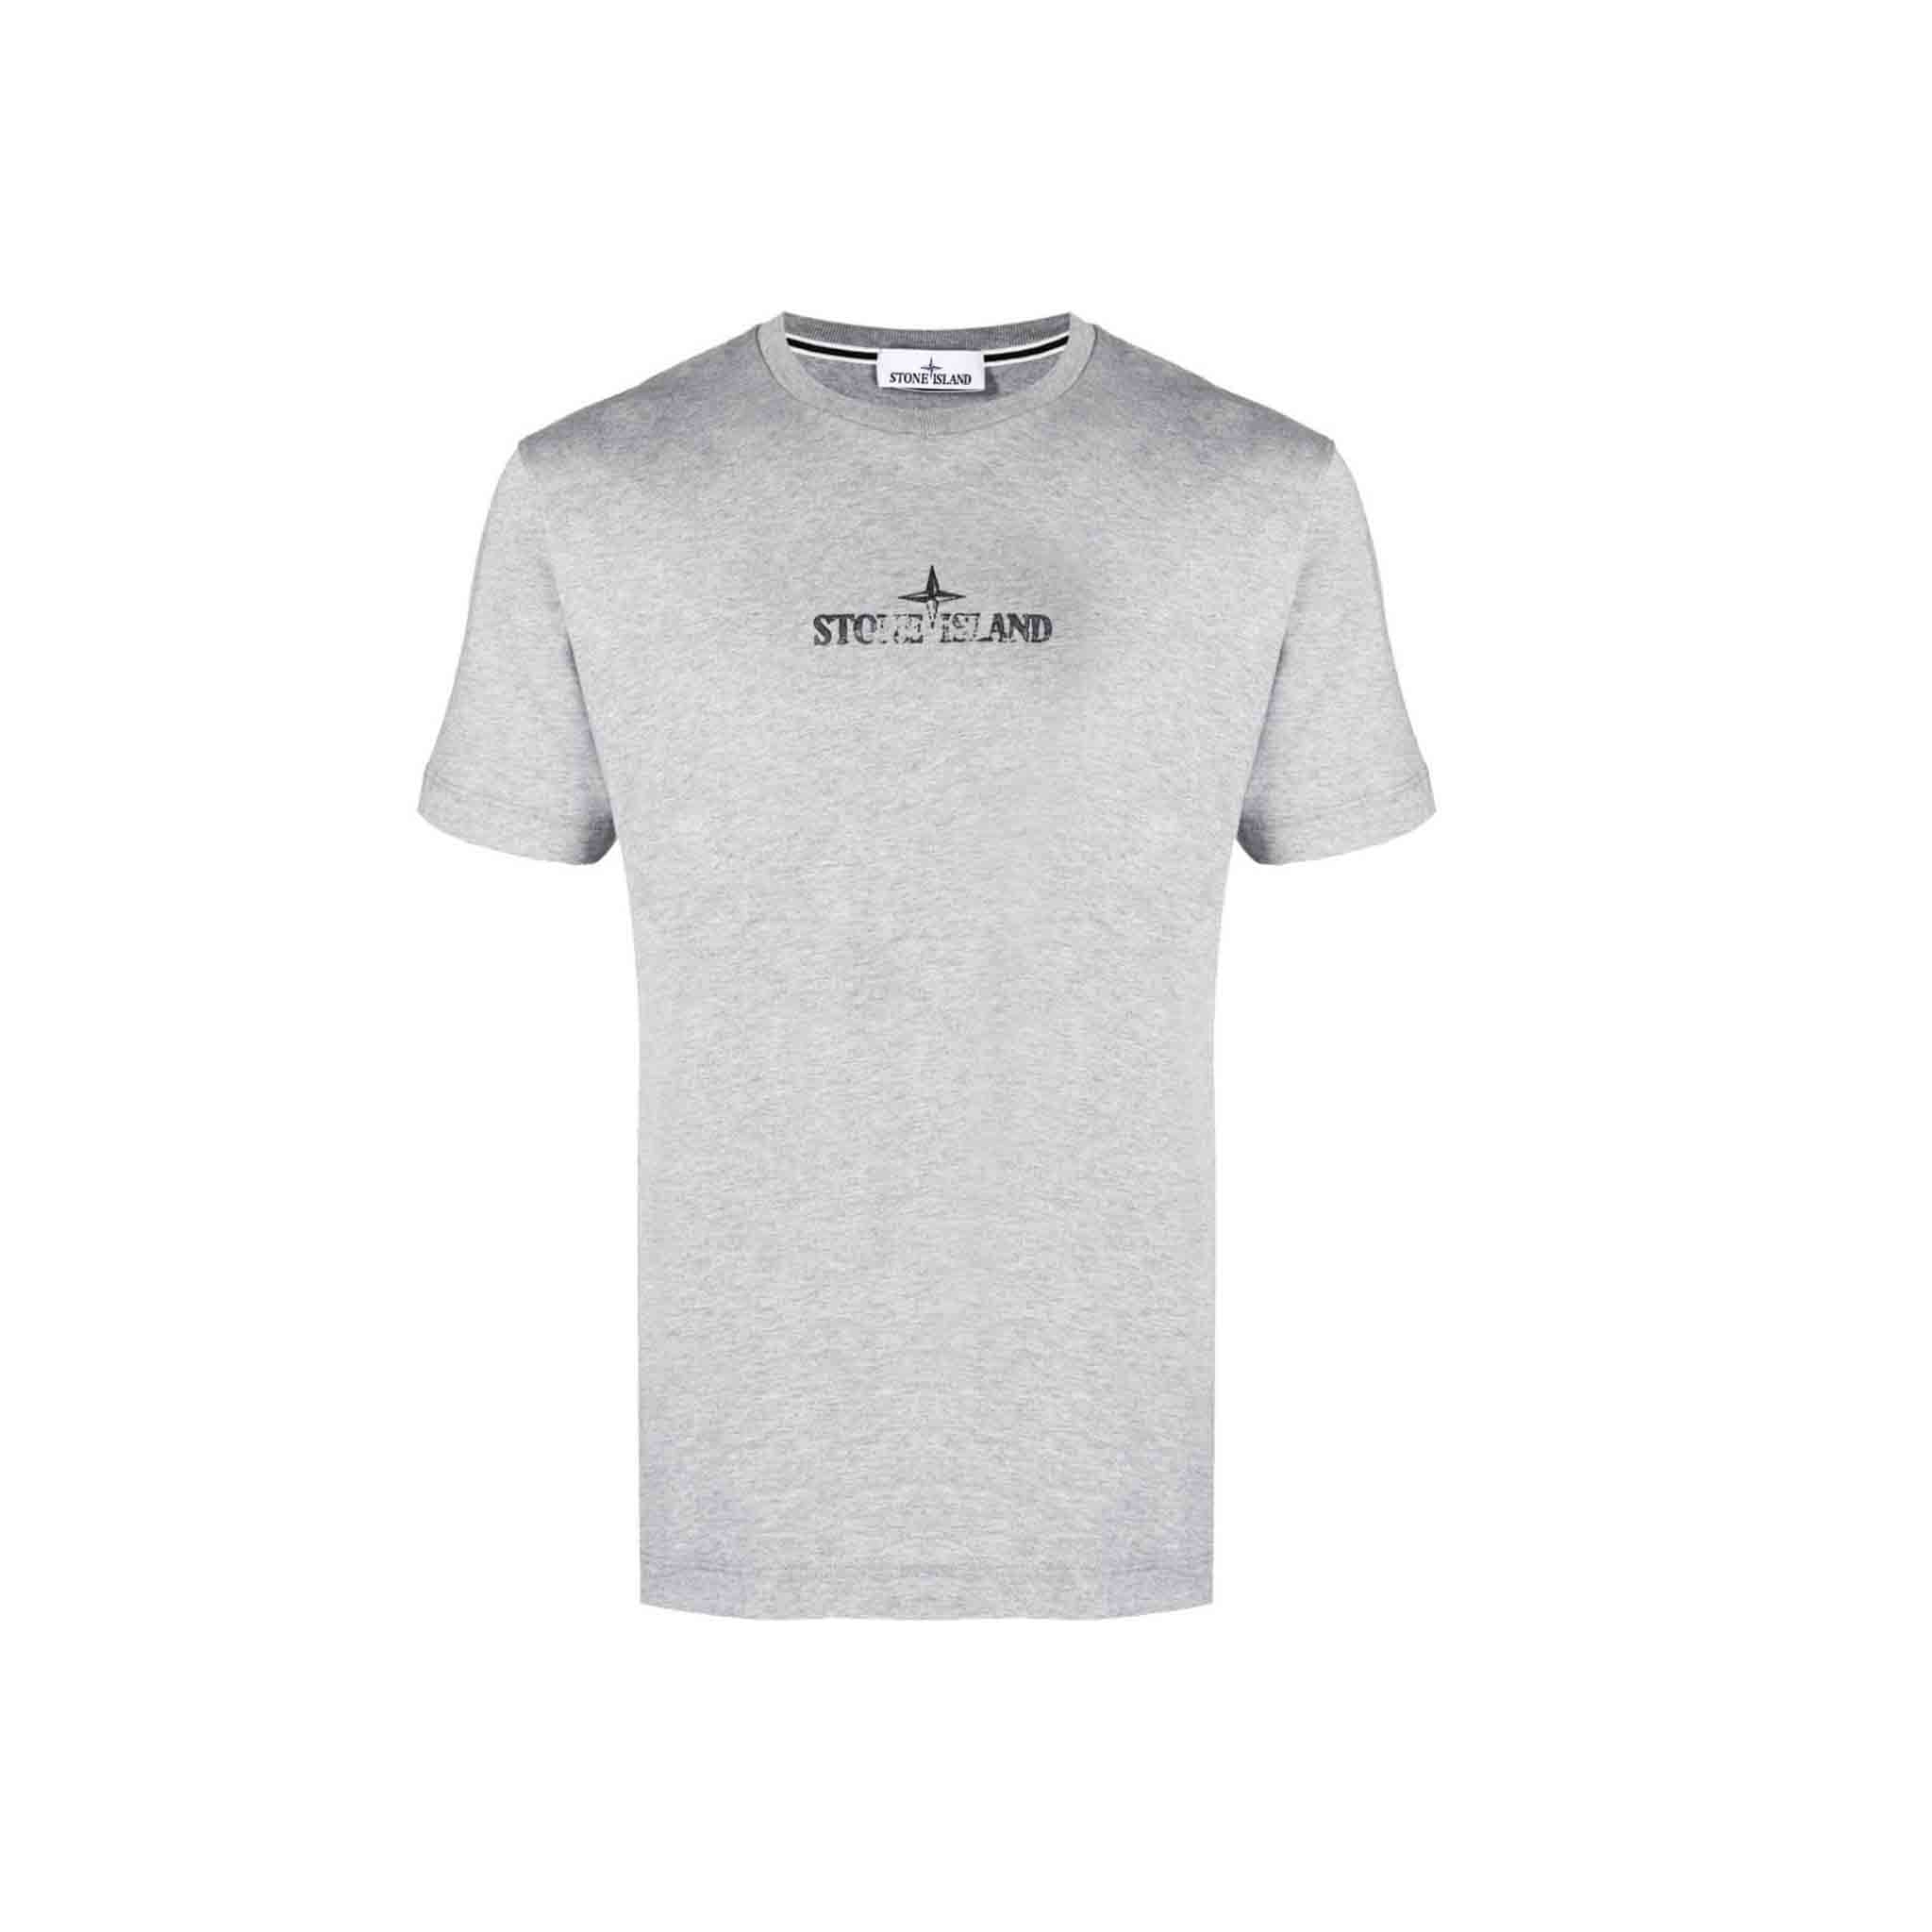 Stone Island "Stamp One" Print T-Shirt in Grey Melange